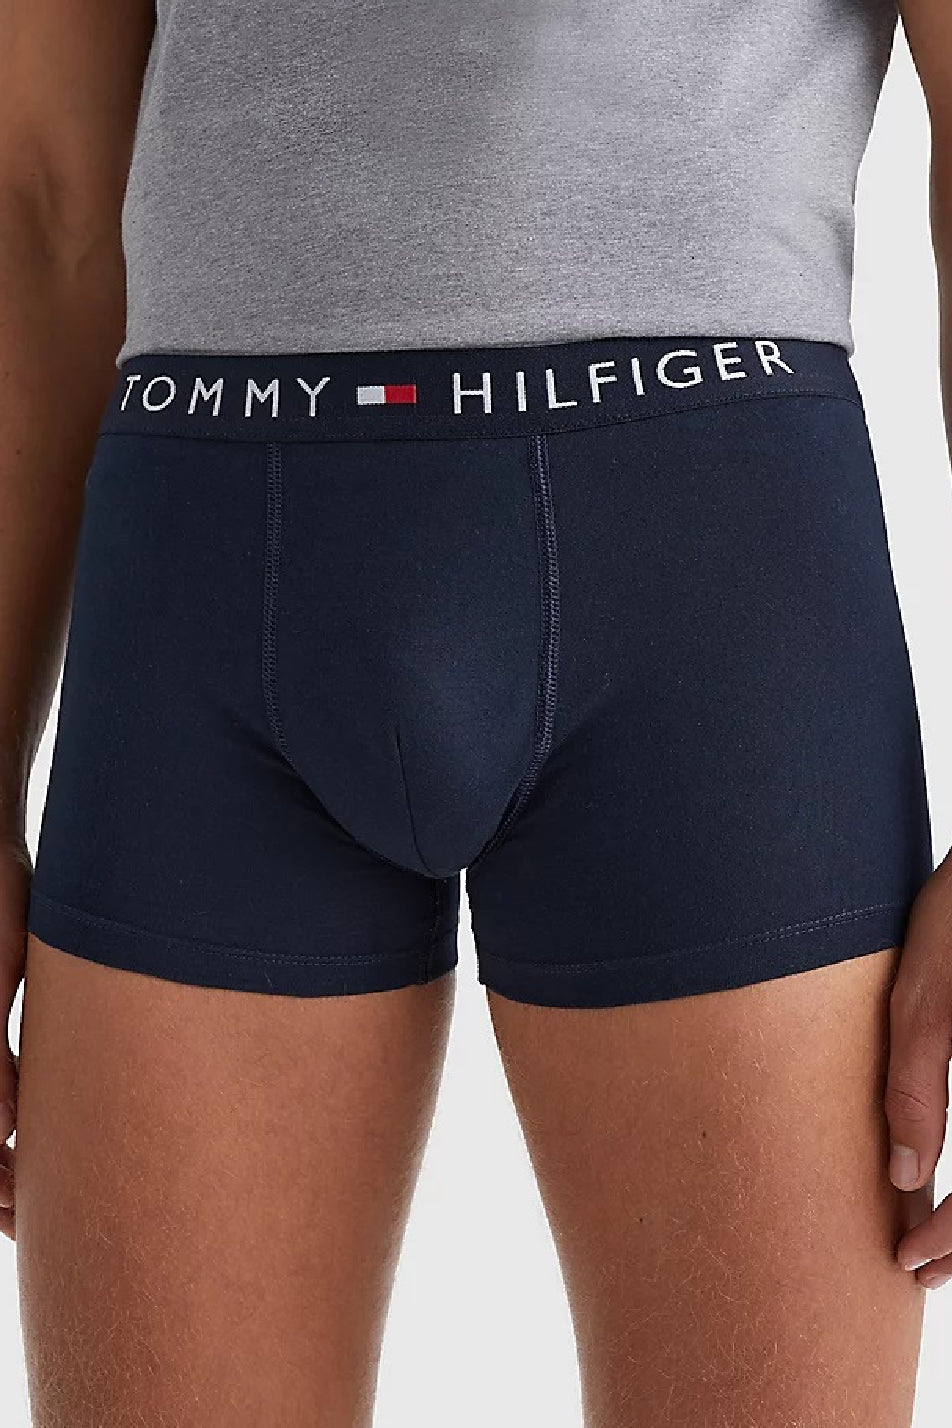 Tommy Hilfiger Men's Trunk & T-Shirt Pack